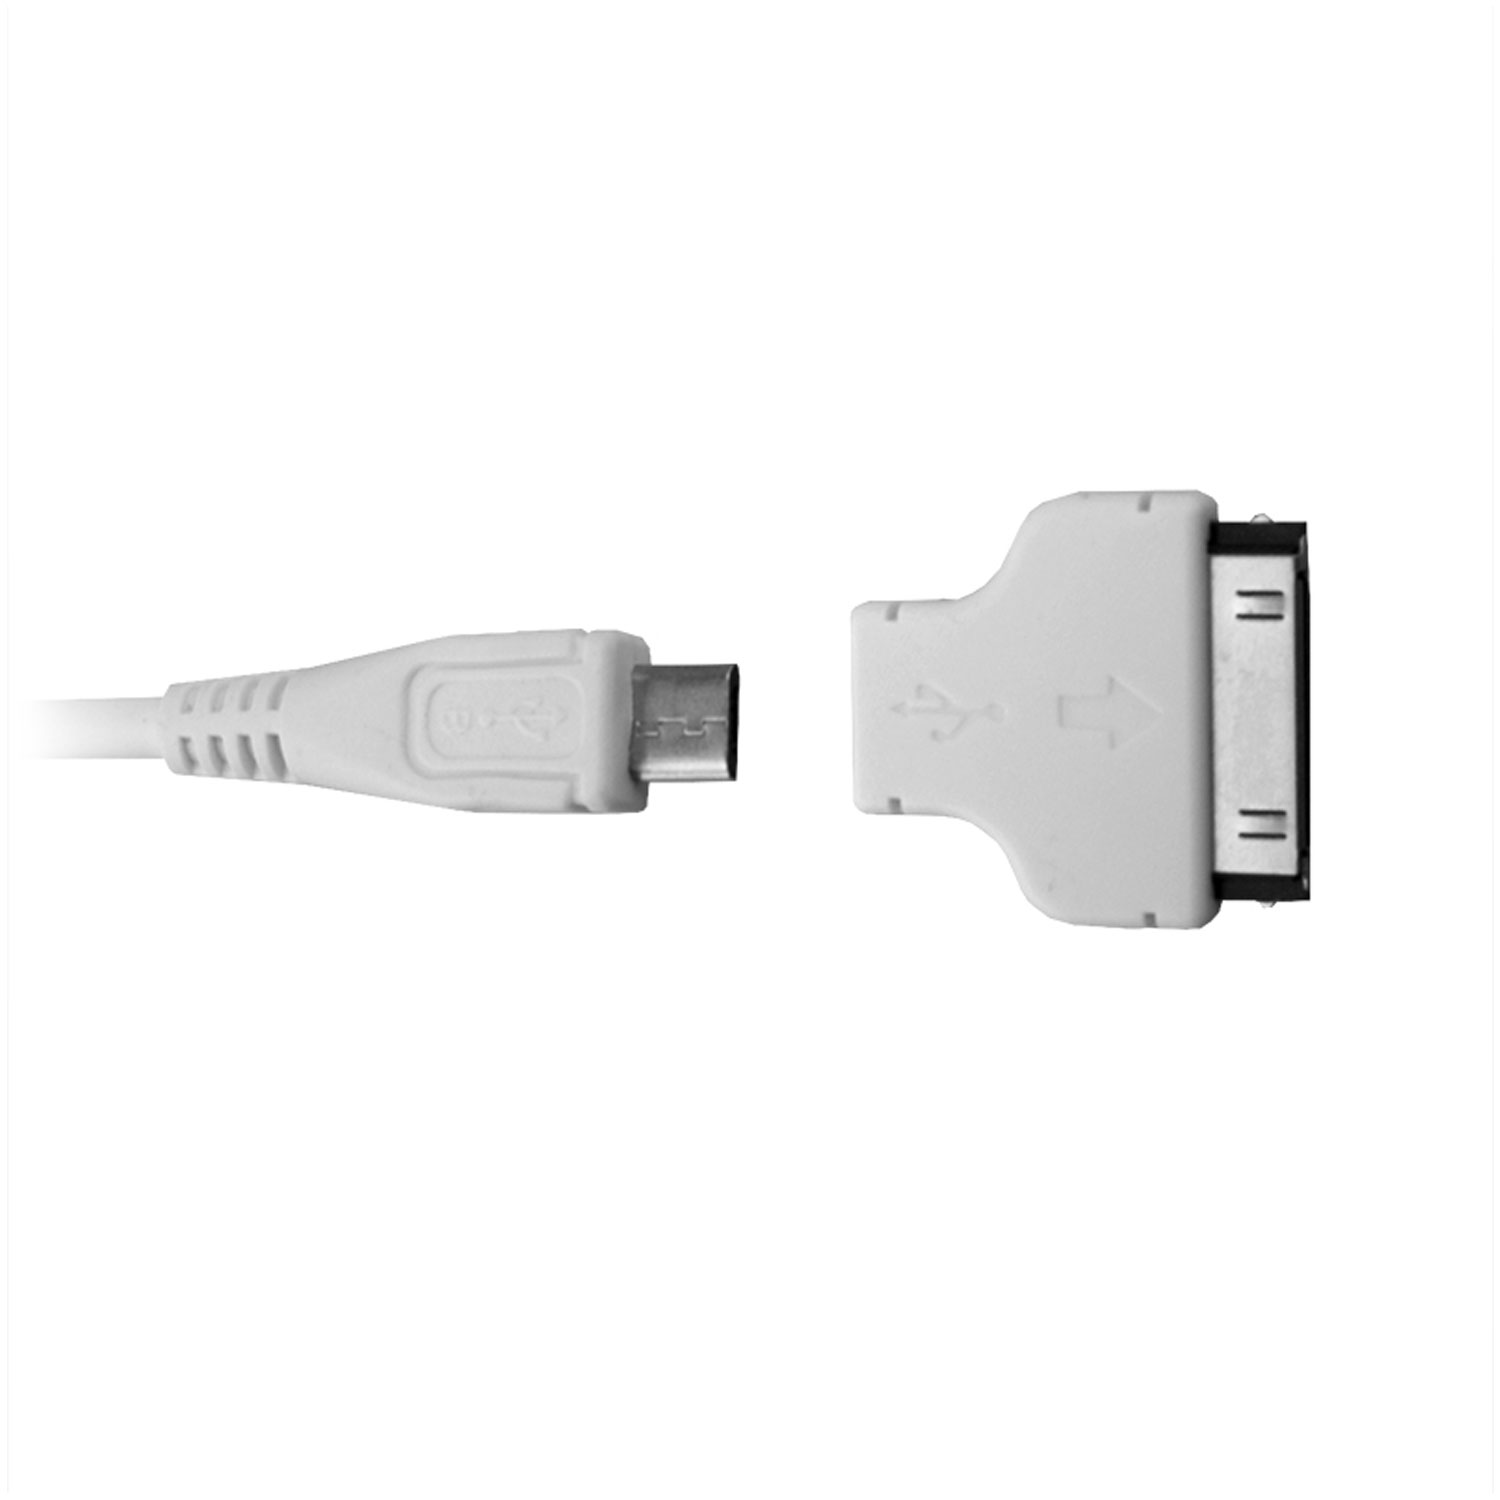 N230 International Dual USB Travel Charger